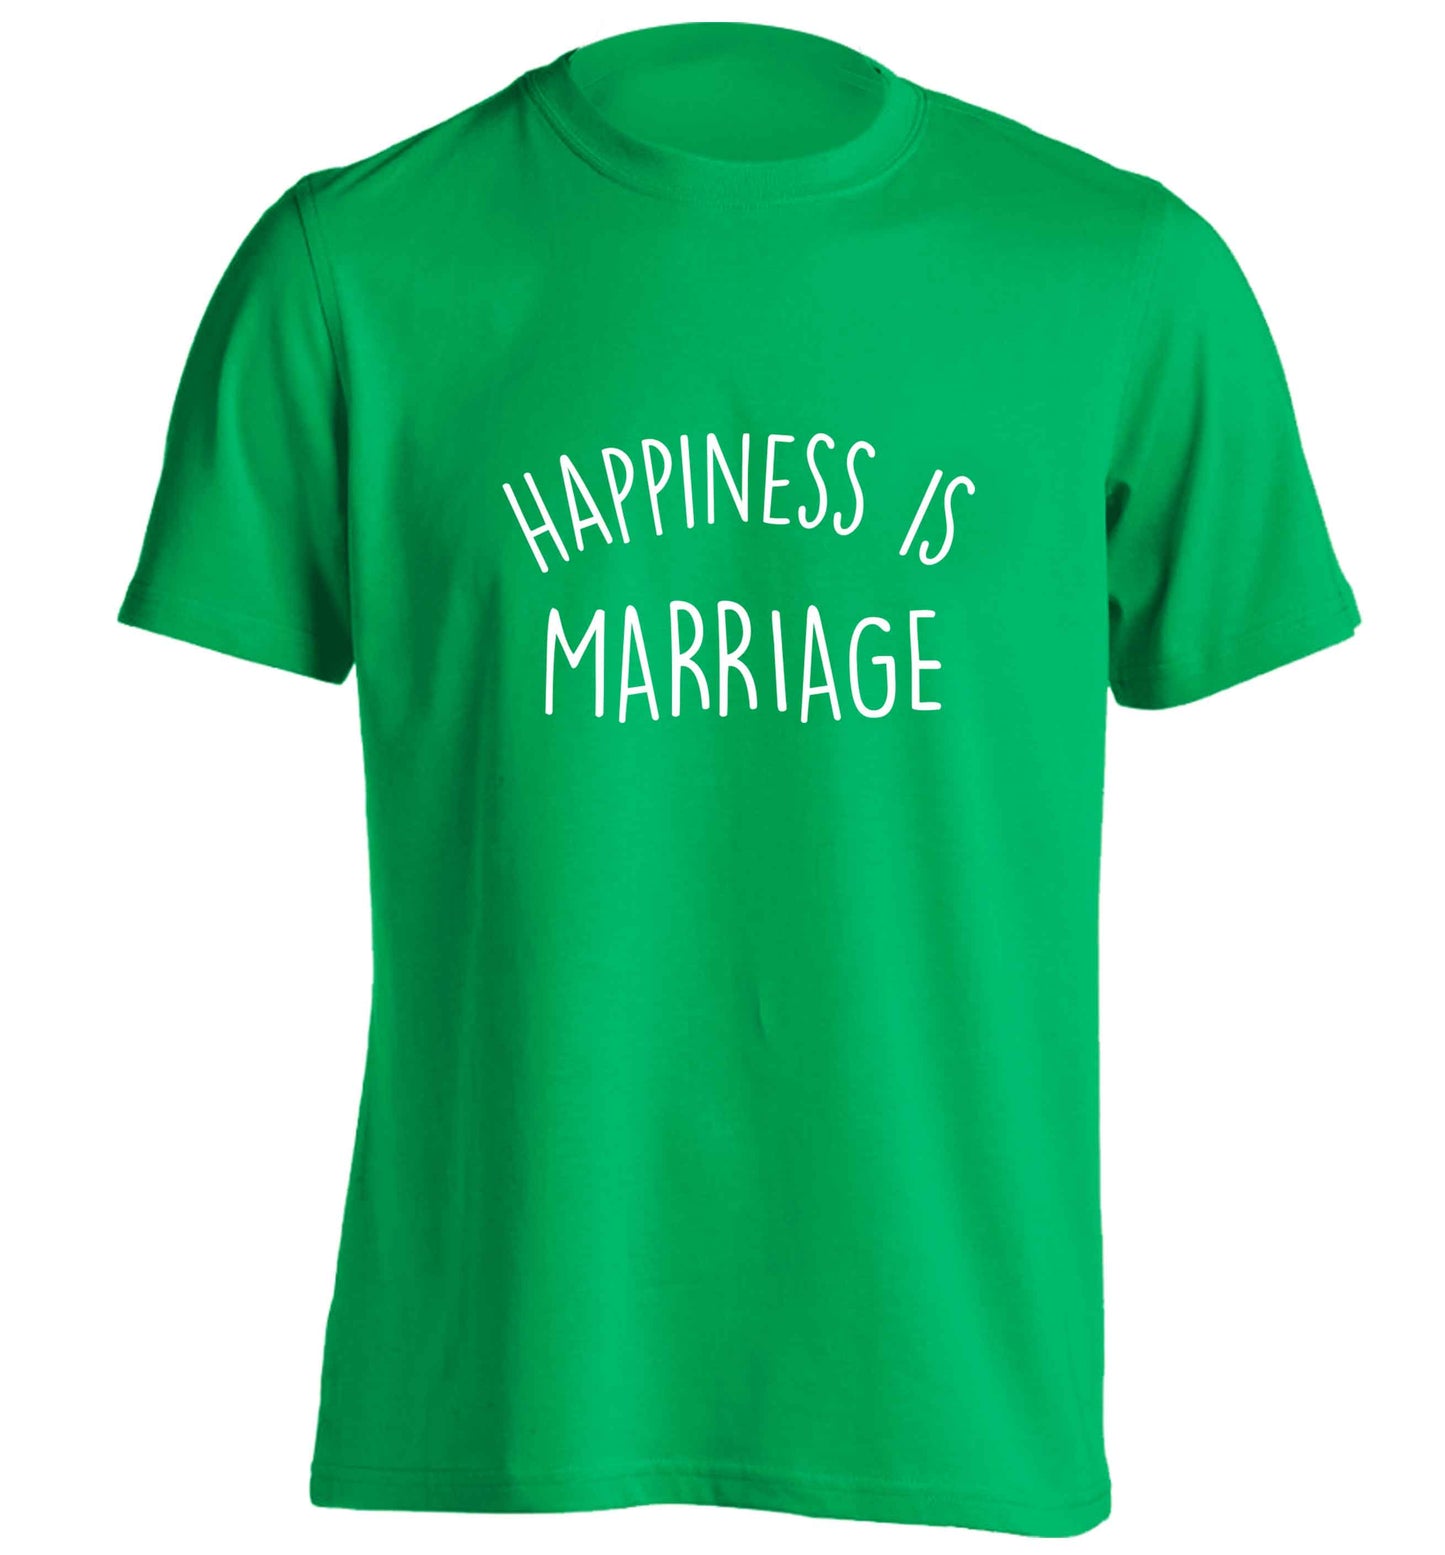 Happiness is wedding planning adults unisex green Tshirt 2XL